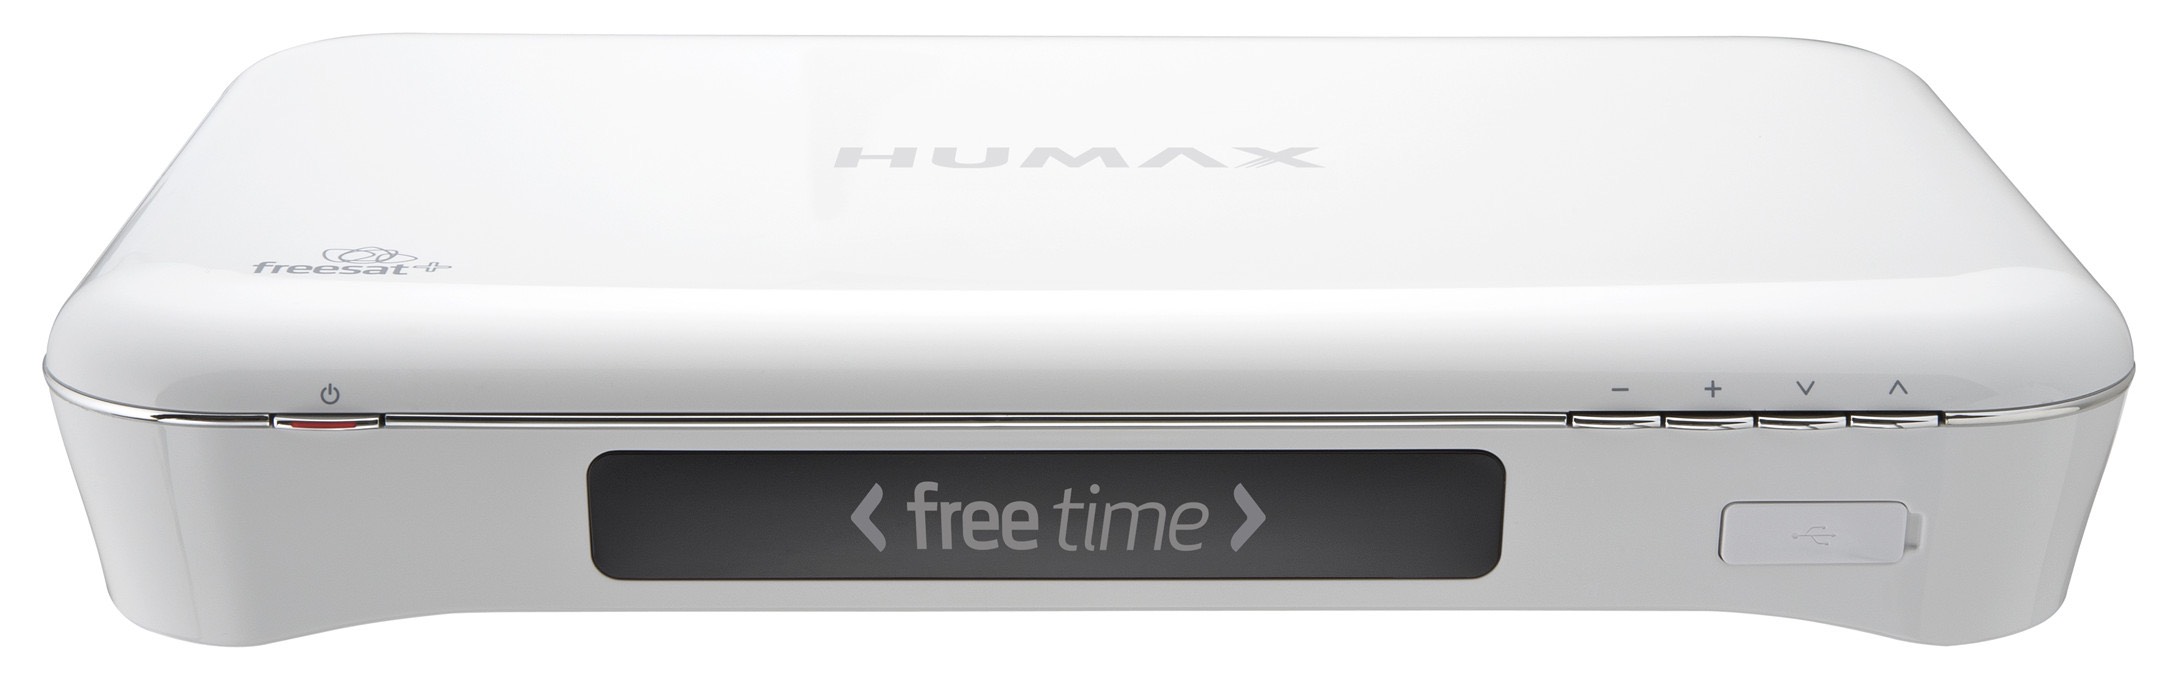 Humax HDR-1010S